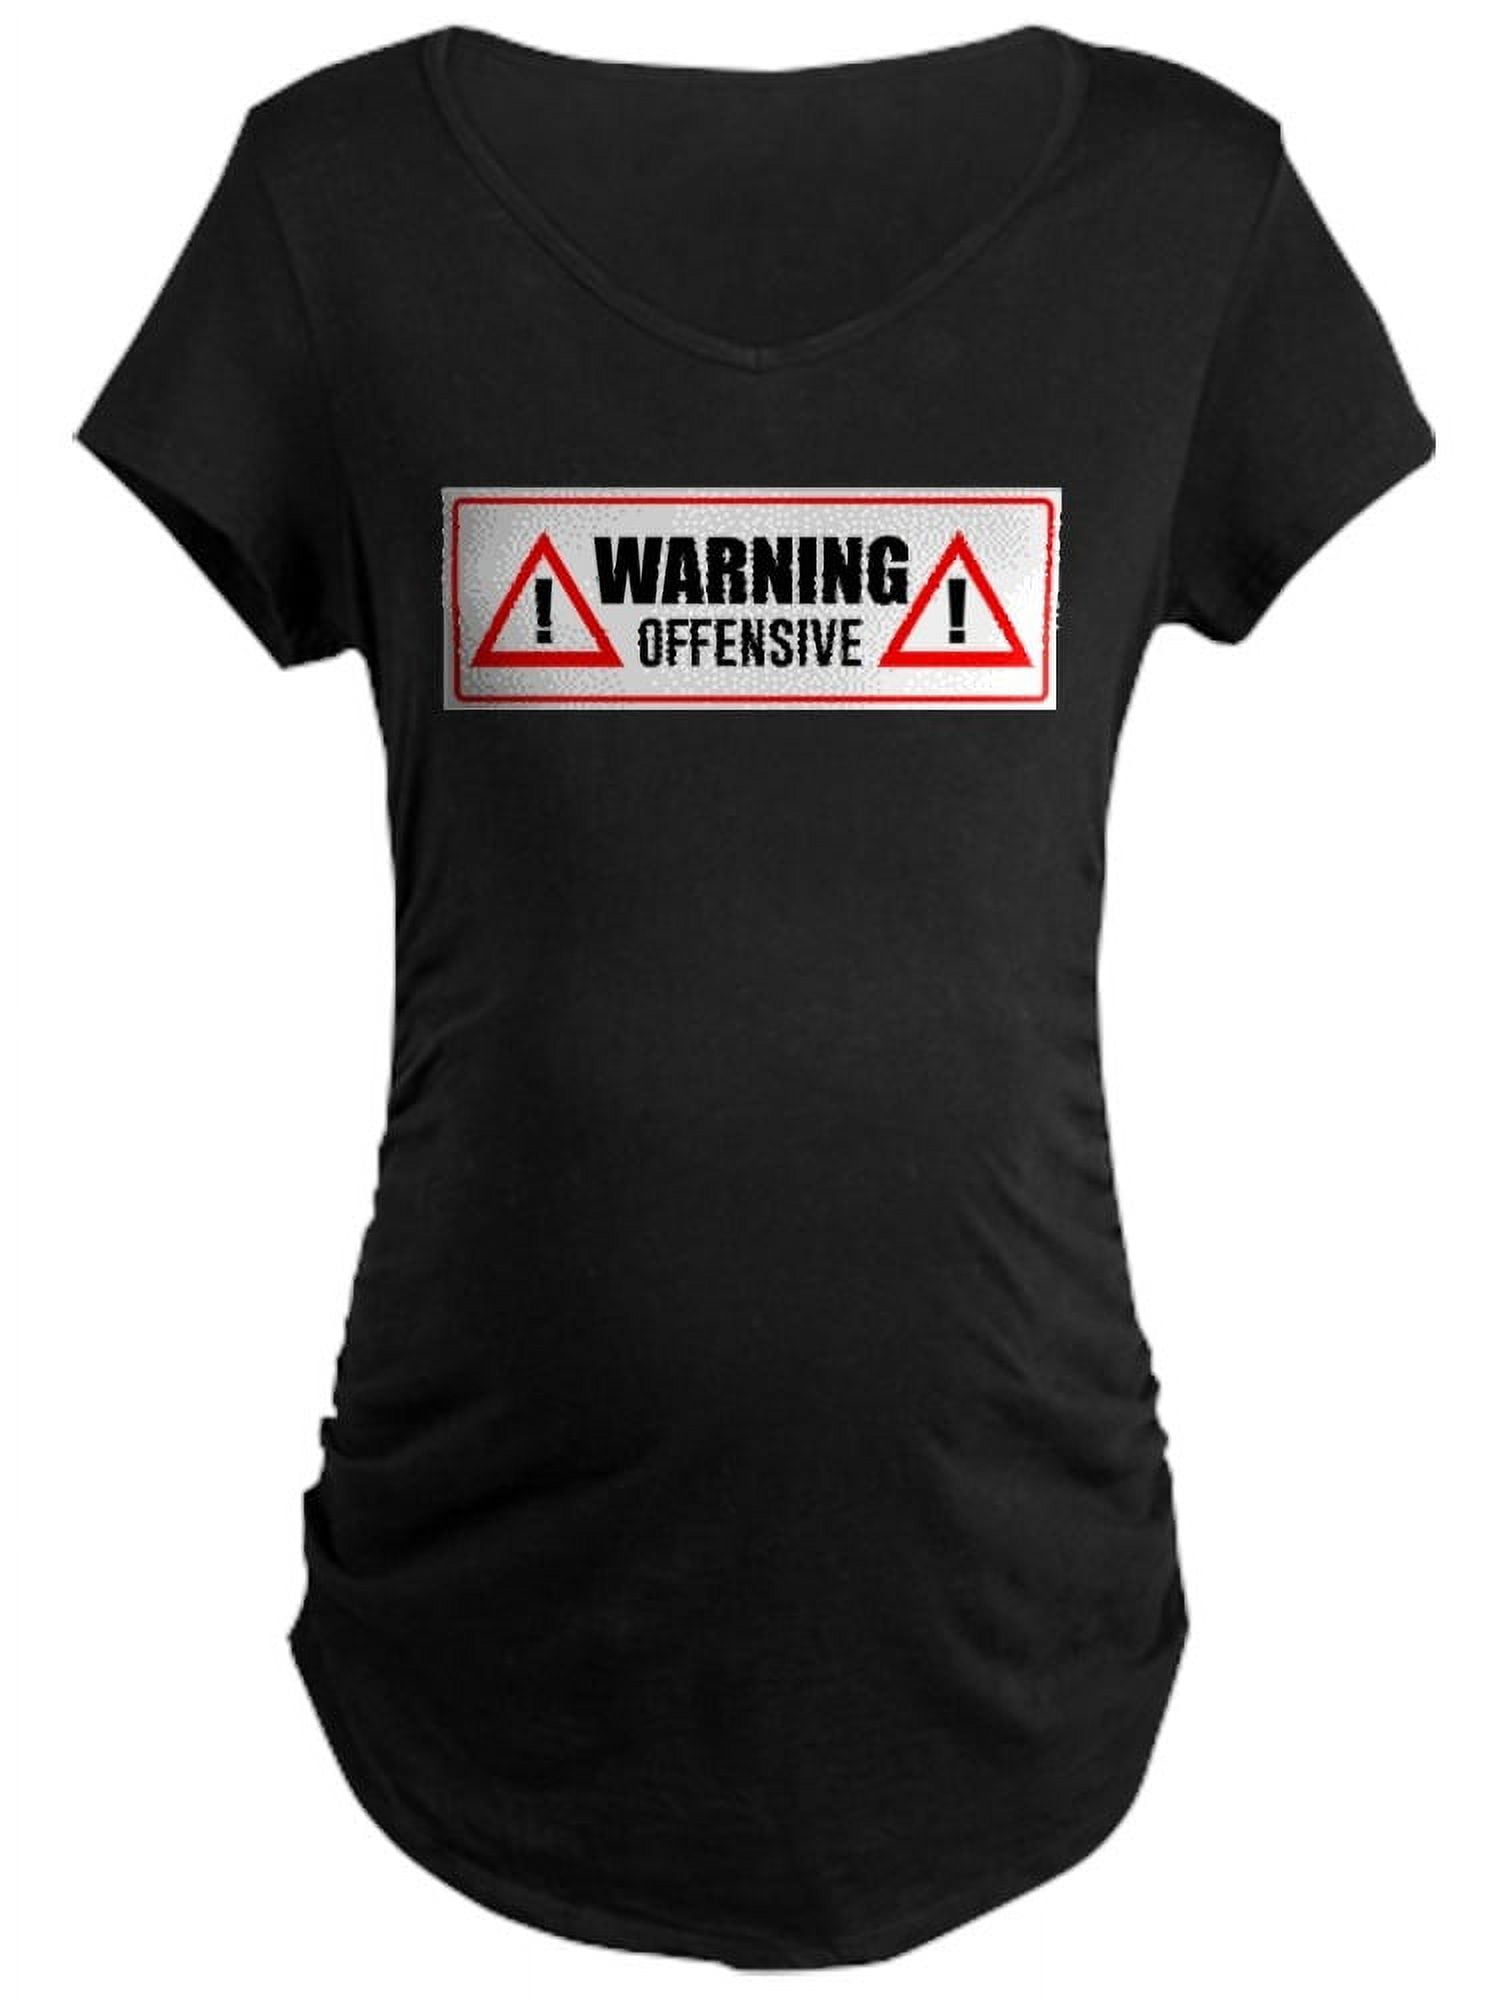 CafePress - Warning Offensive - Maternity Dark T-Shirt